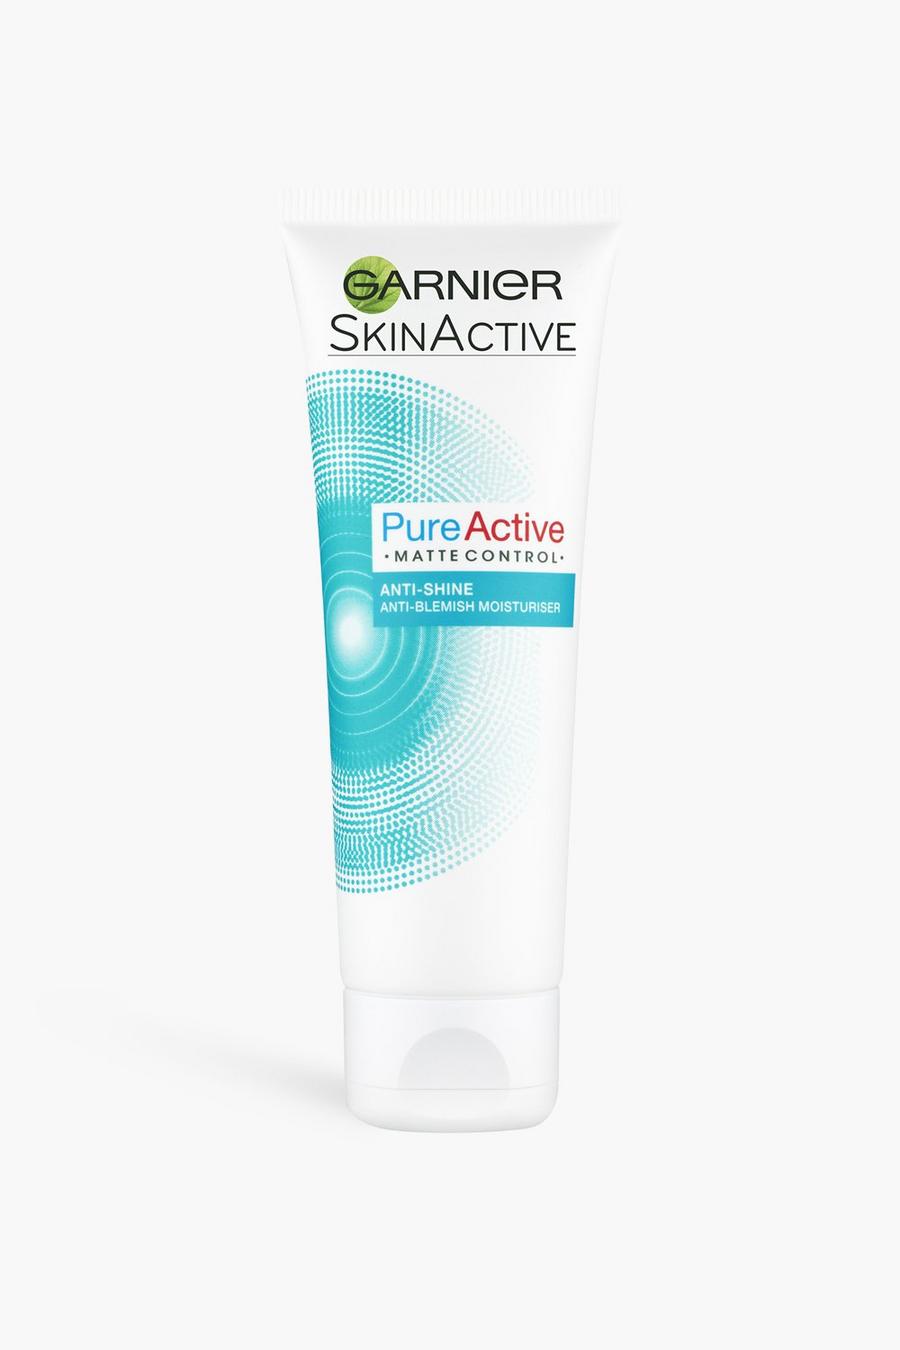 White vit Garnier Pure Active Matte Control Anti-Blemish Face Moisturiser 50ml